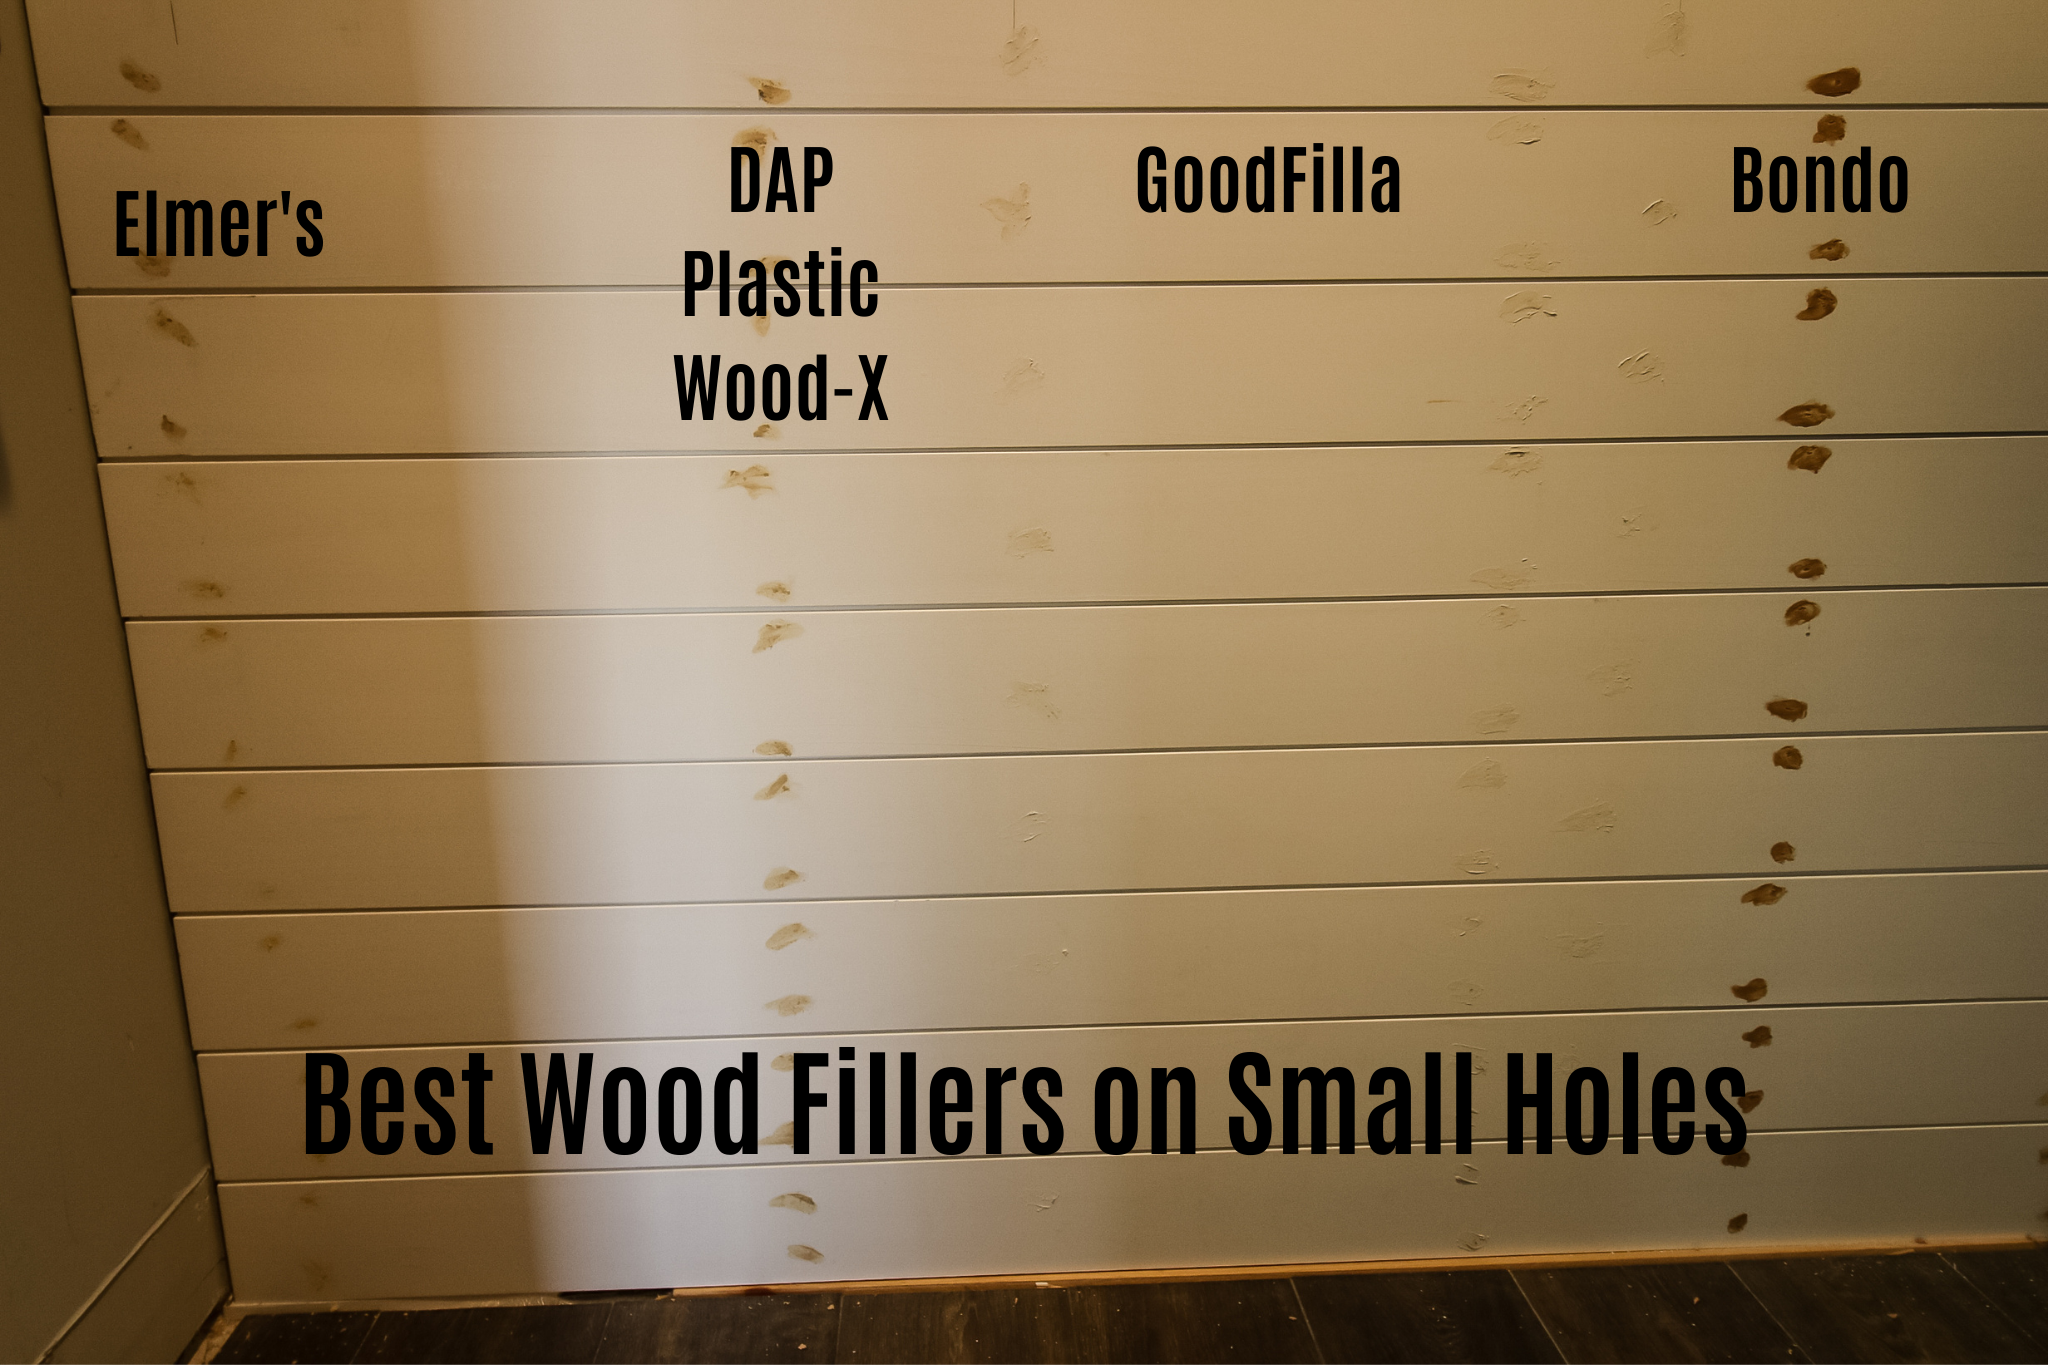 repair - How do I use DAP plastic wood filler safely? - Home